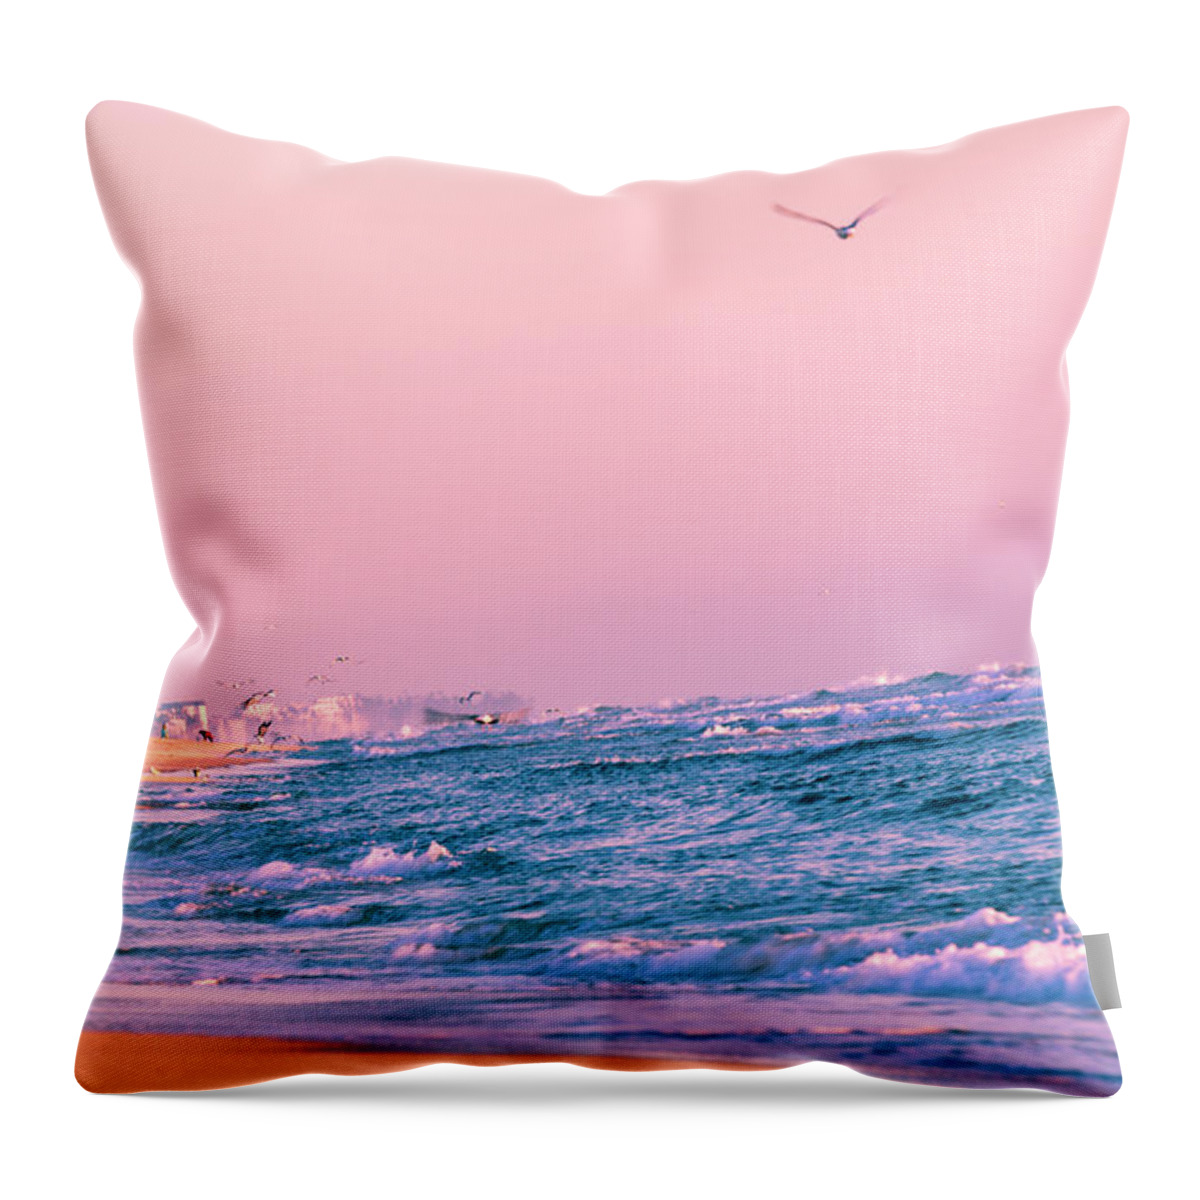 Atlantic Ocean Throw Pillow featuring the photograph 4168 Delray Beach Florida Atlantic Ocean by Amyn Nasser Neptune Gallery